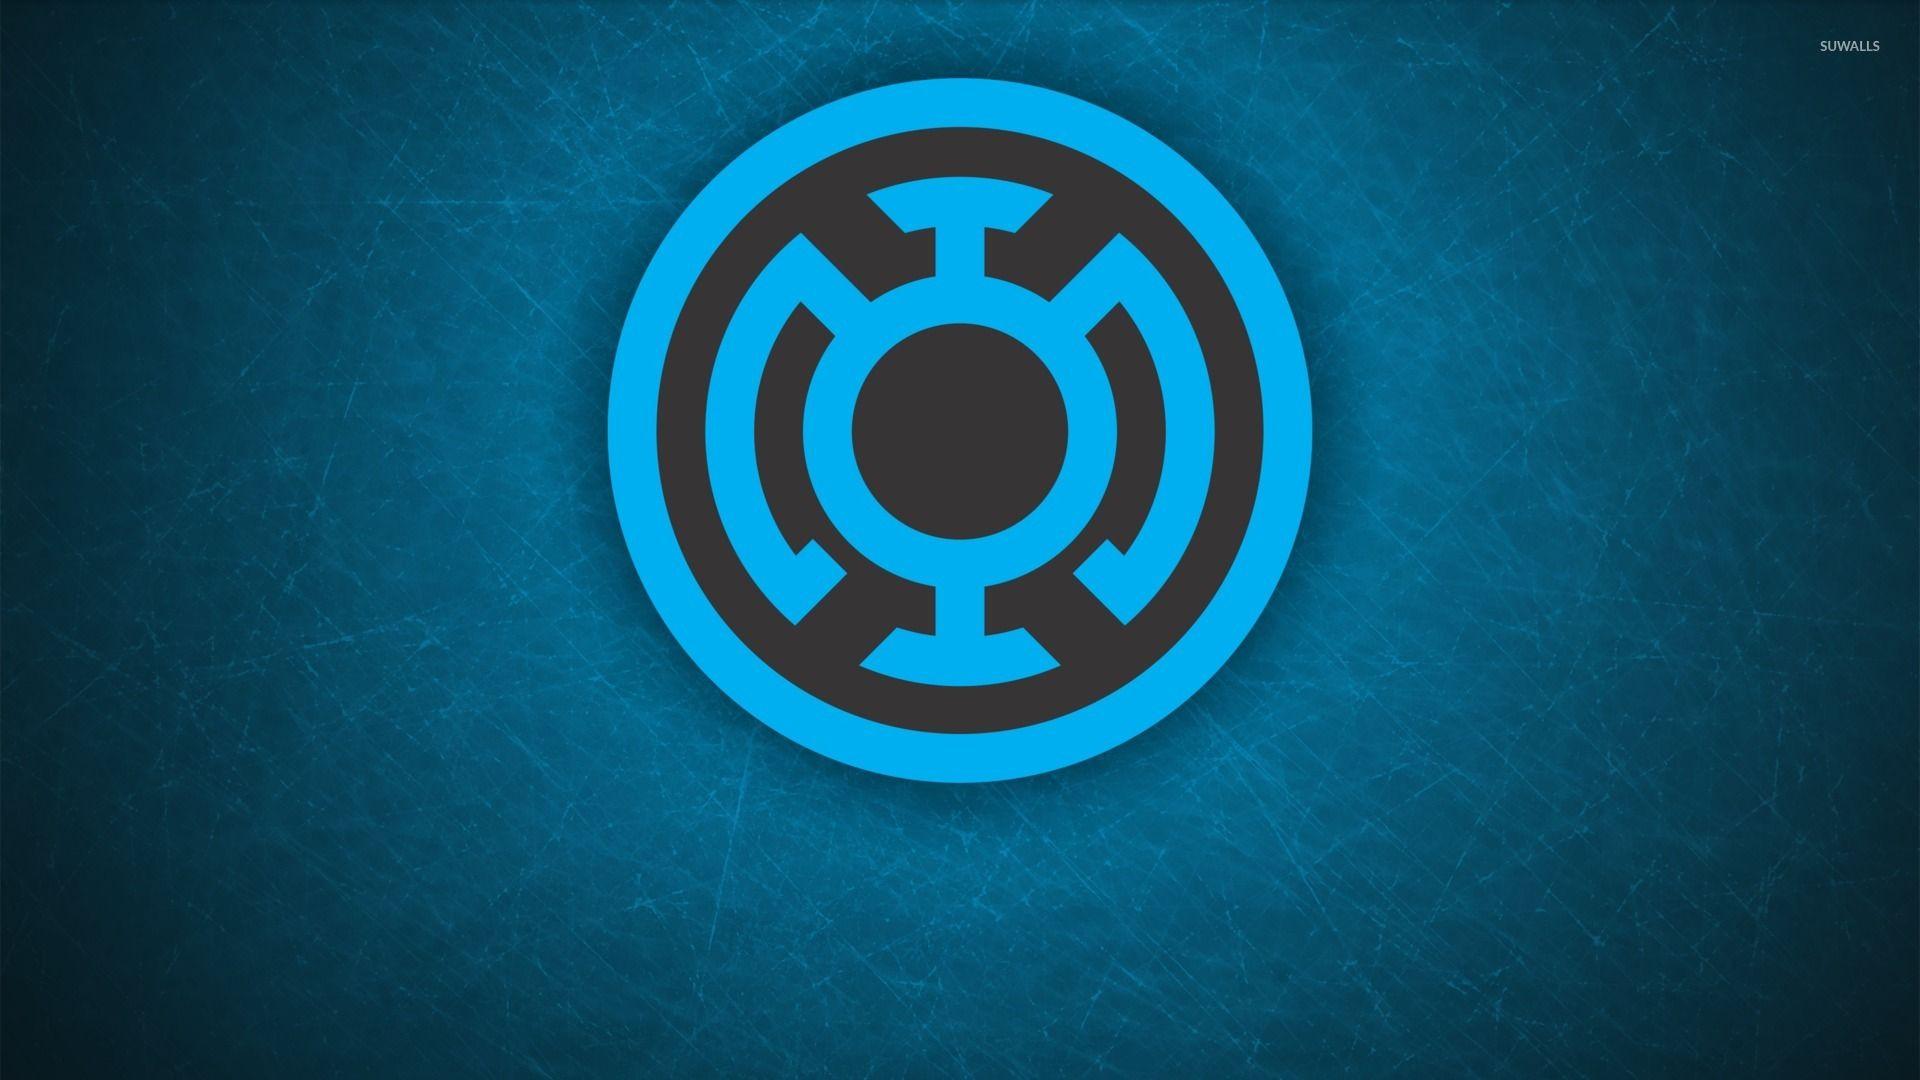 Blue Lantern Corps logo wallpaper wallpaper